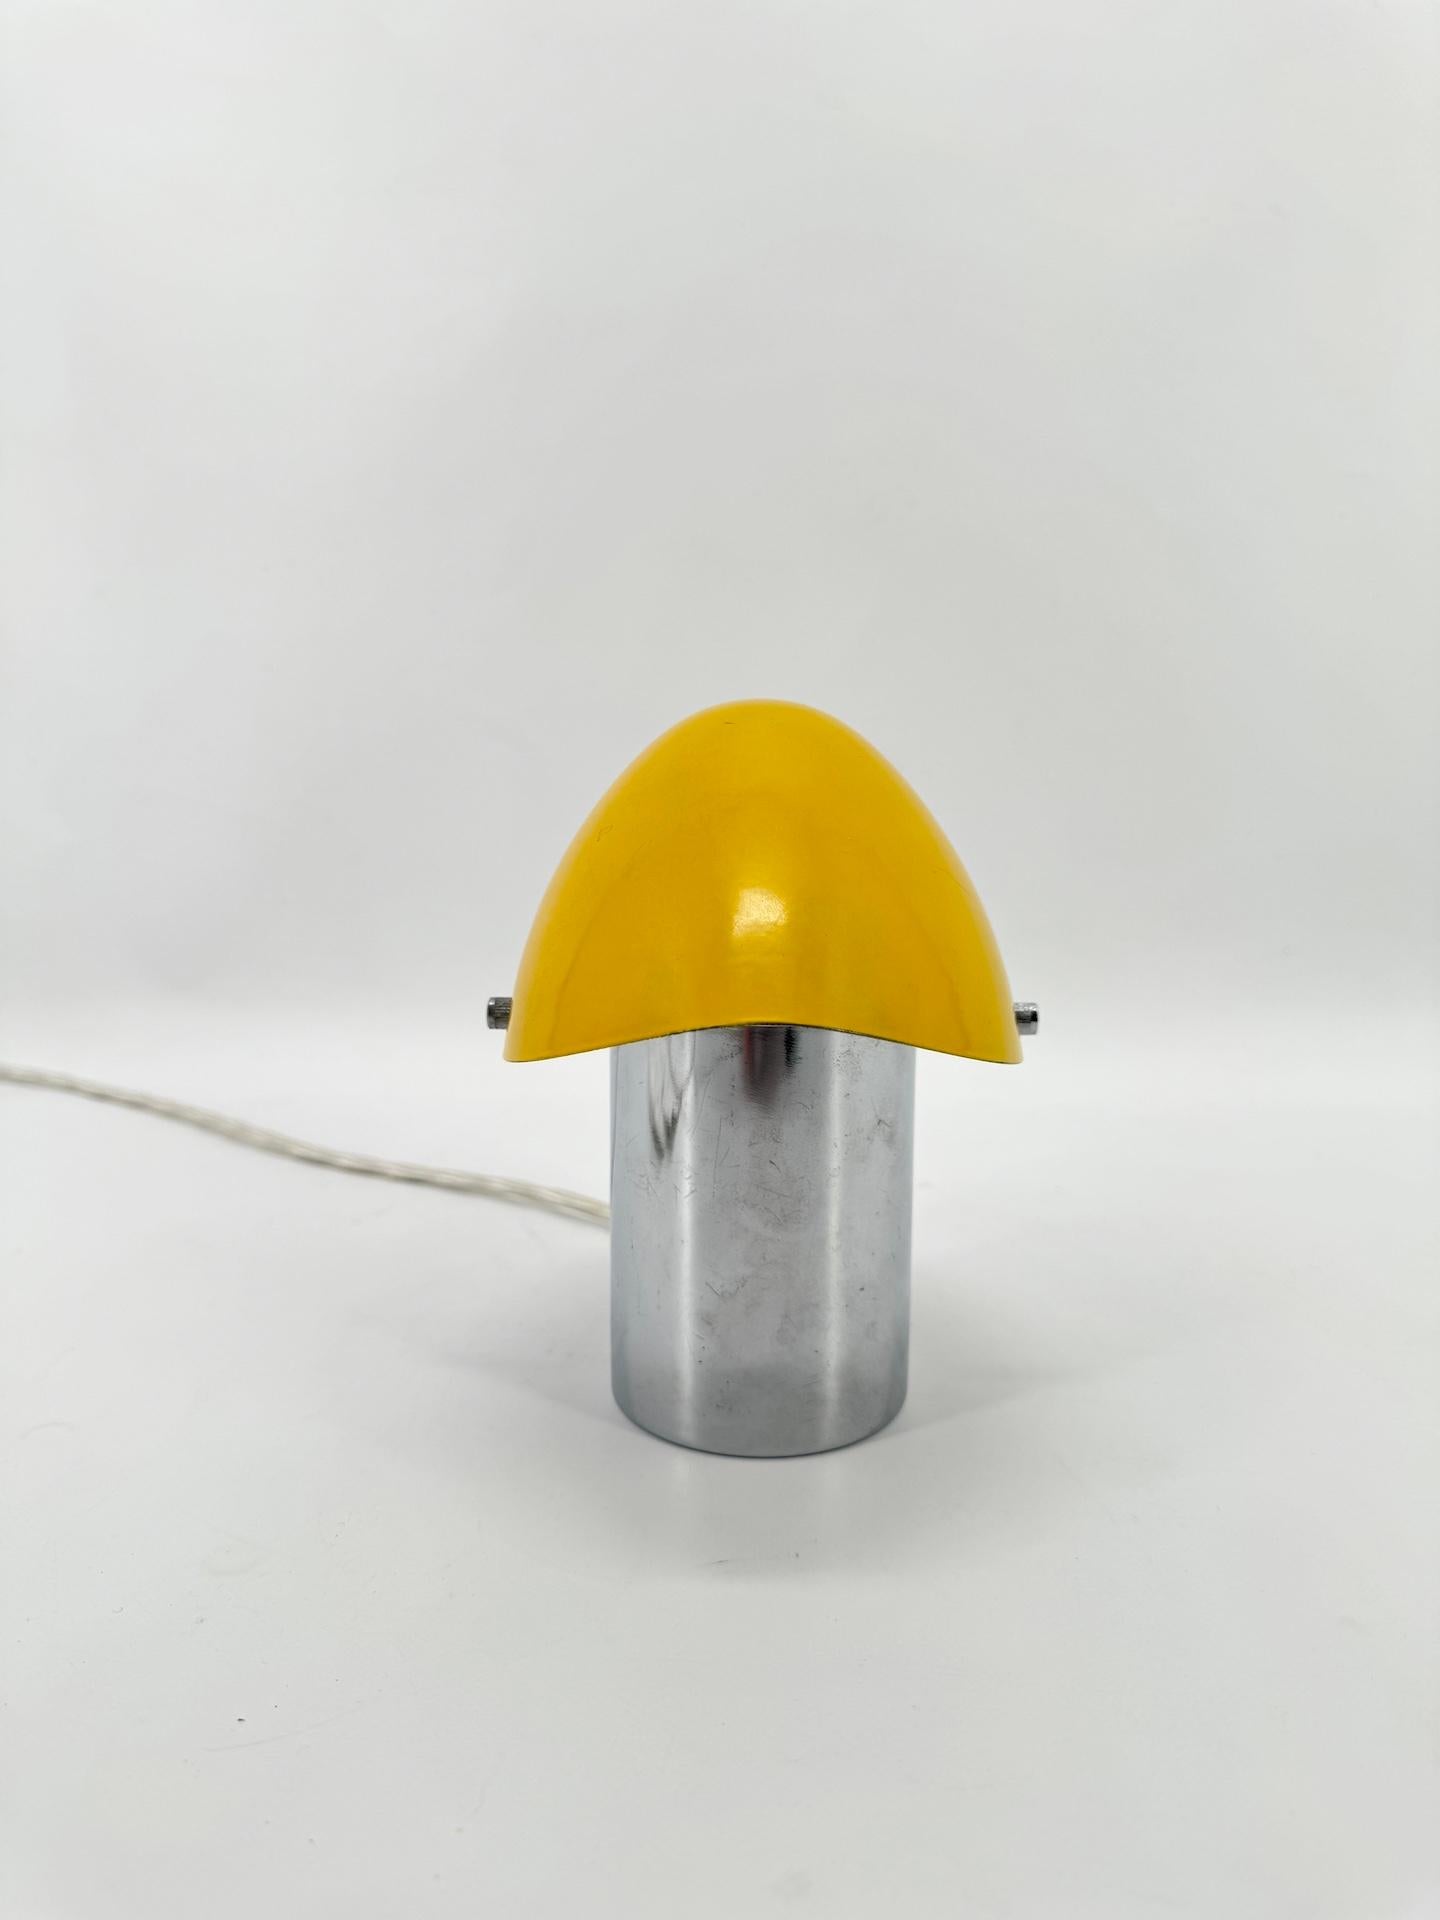 Metal Small Yellow Adjustable Table Lamp by Josef Hurka, Circa 1960, Czechoslovakia.